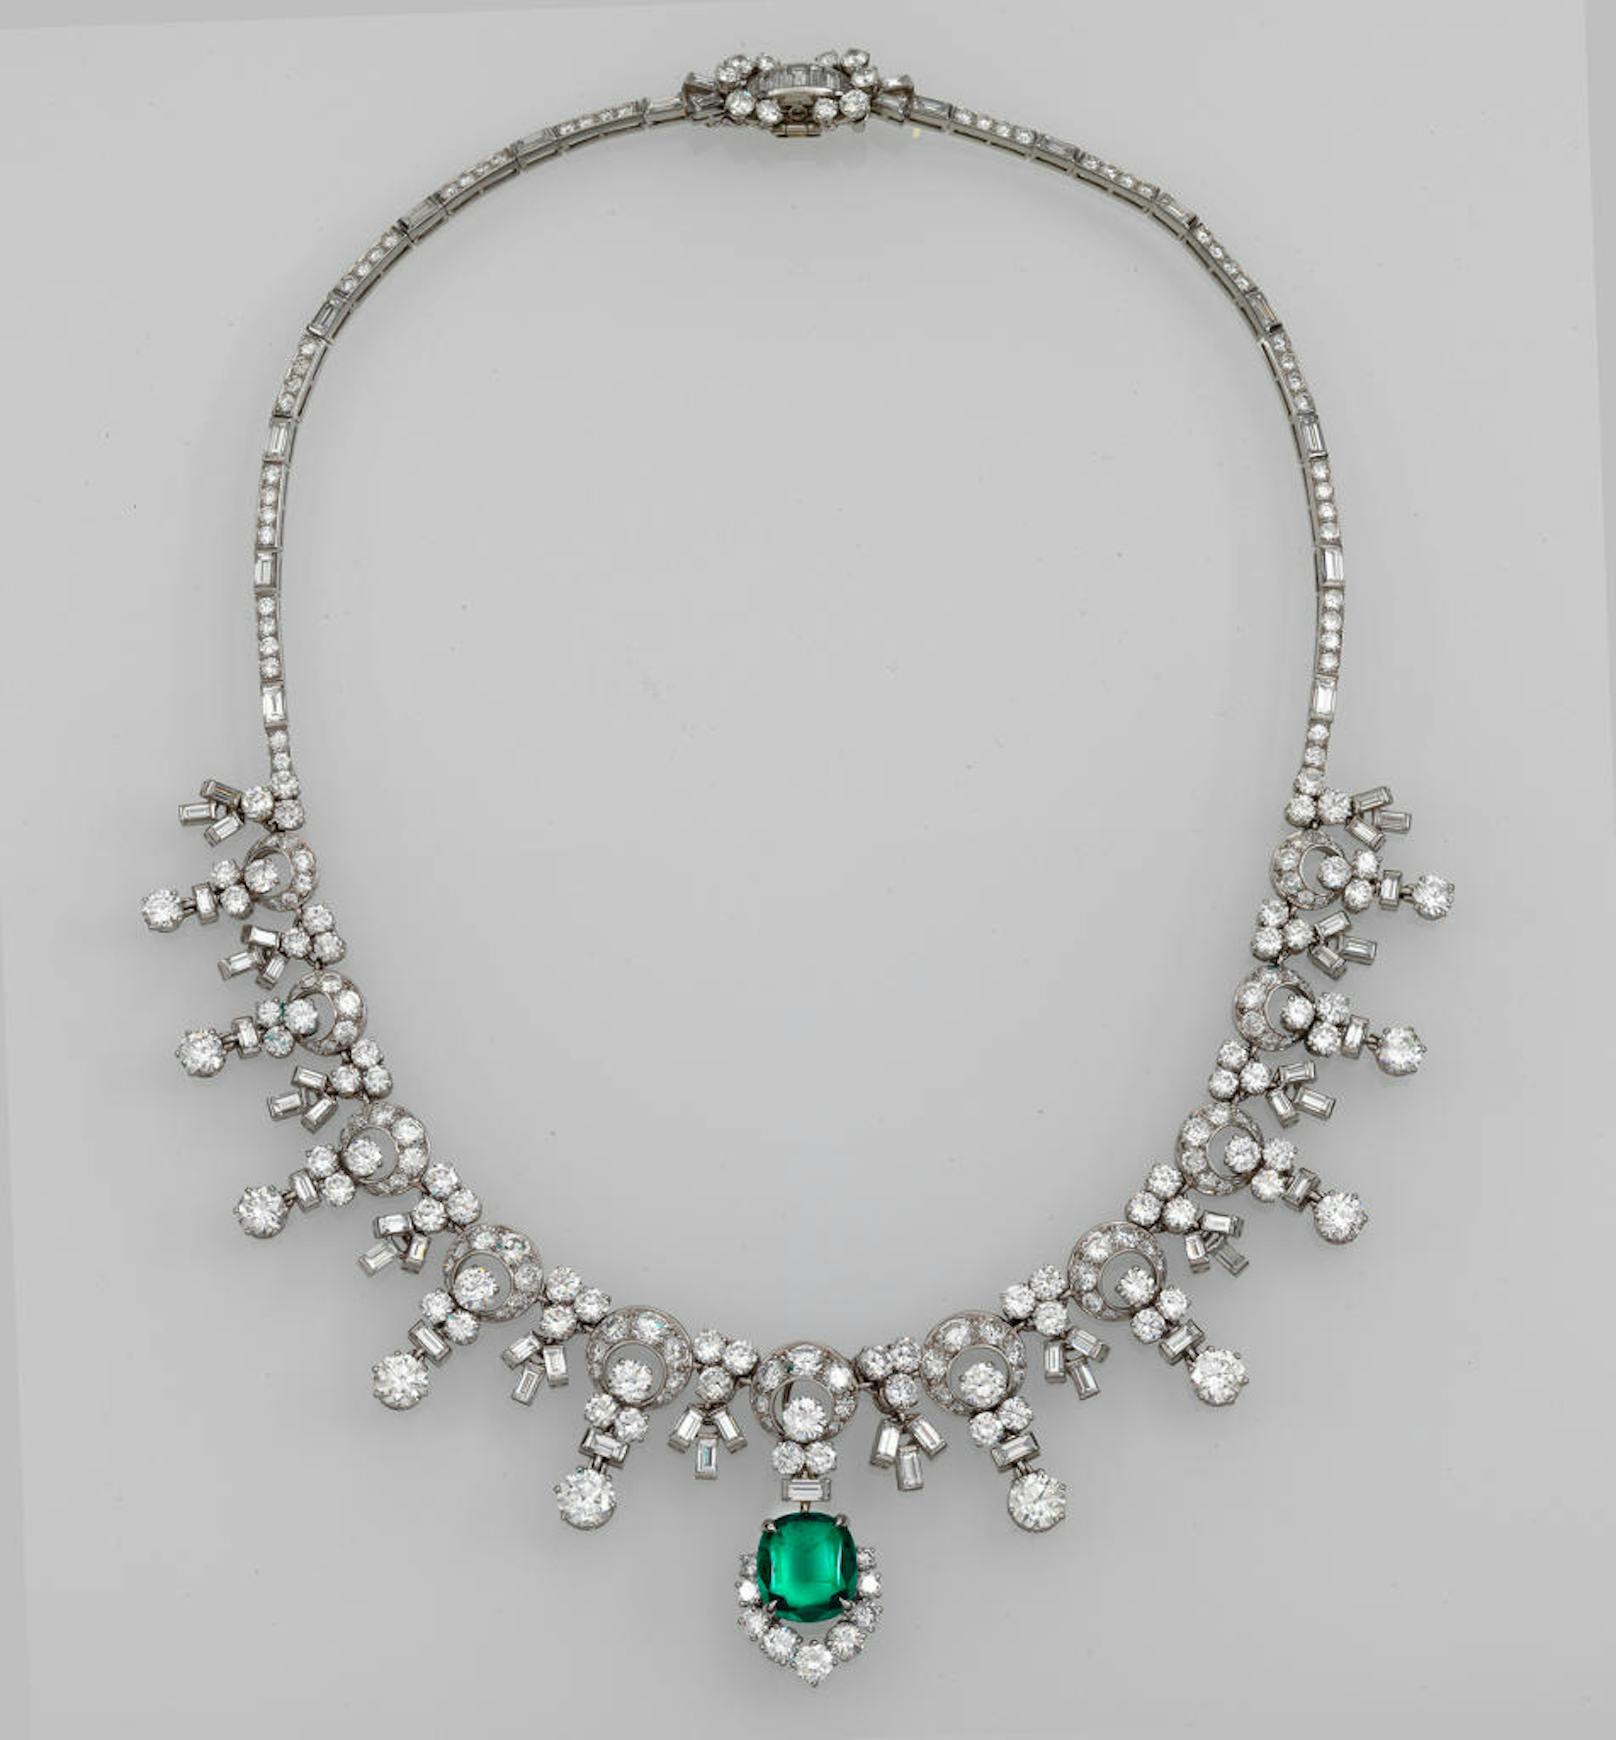 Dorotheum Auktion Juwelen (27.4.2017): Bulgari Brillant Smaragdcollier um 45.000-65.000 Euro